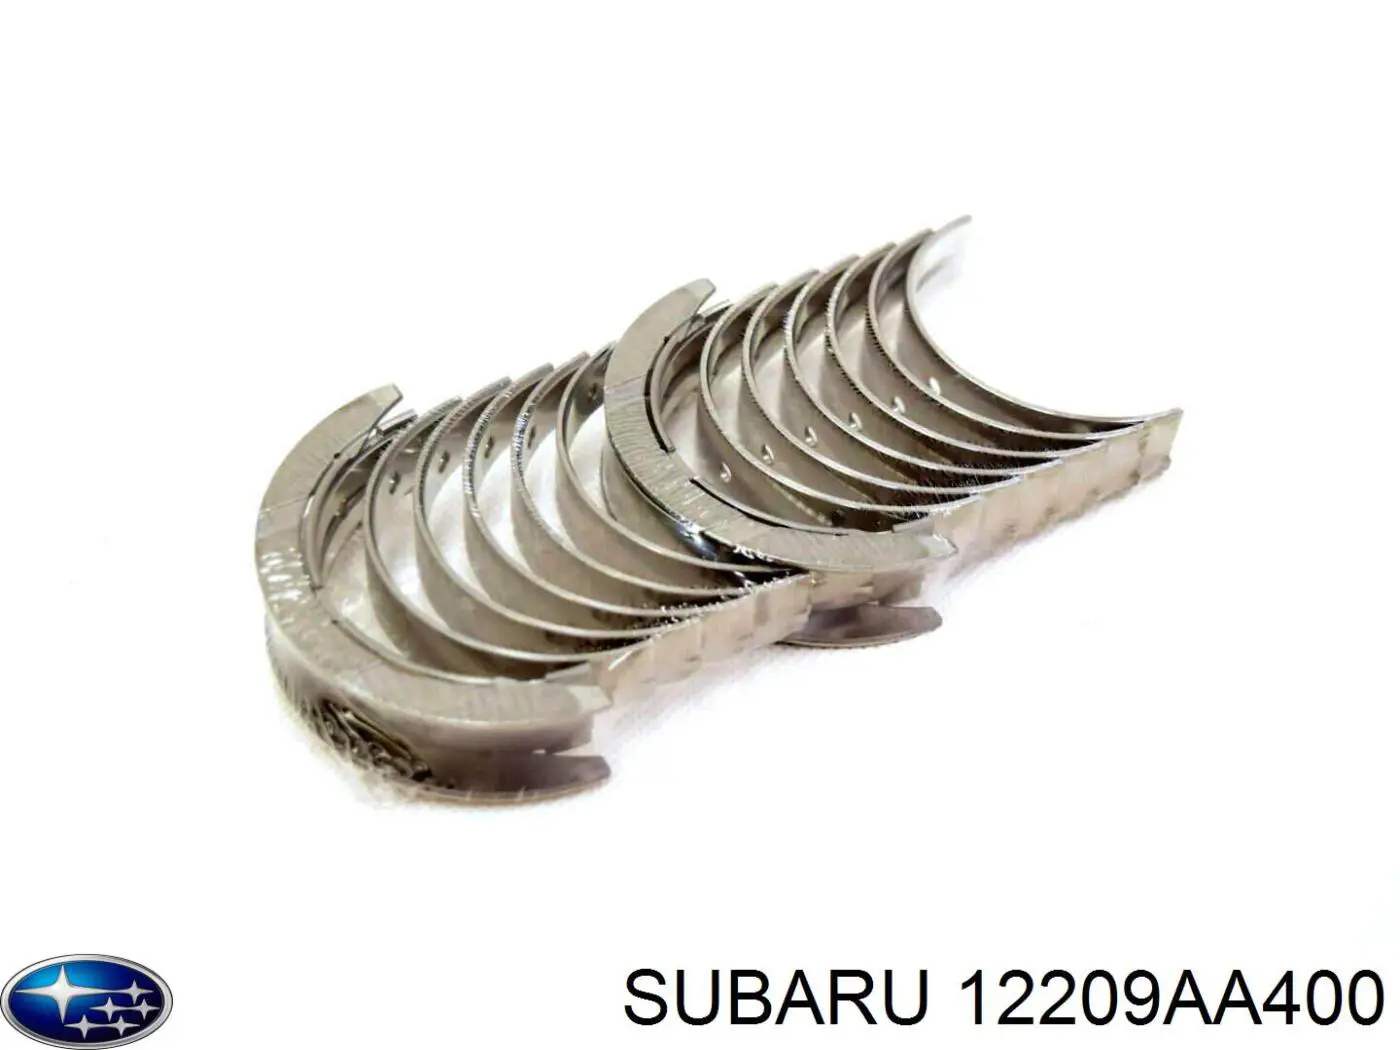 12209AA400 Subaru вкладыши коленвала коренные, комплект, стандарт (std)